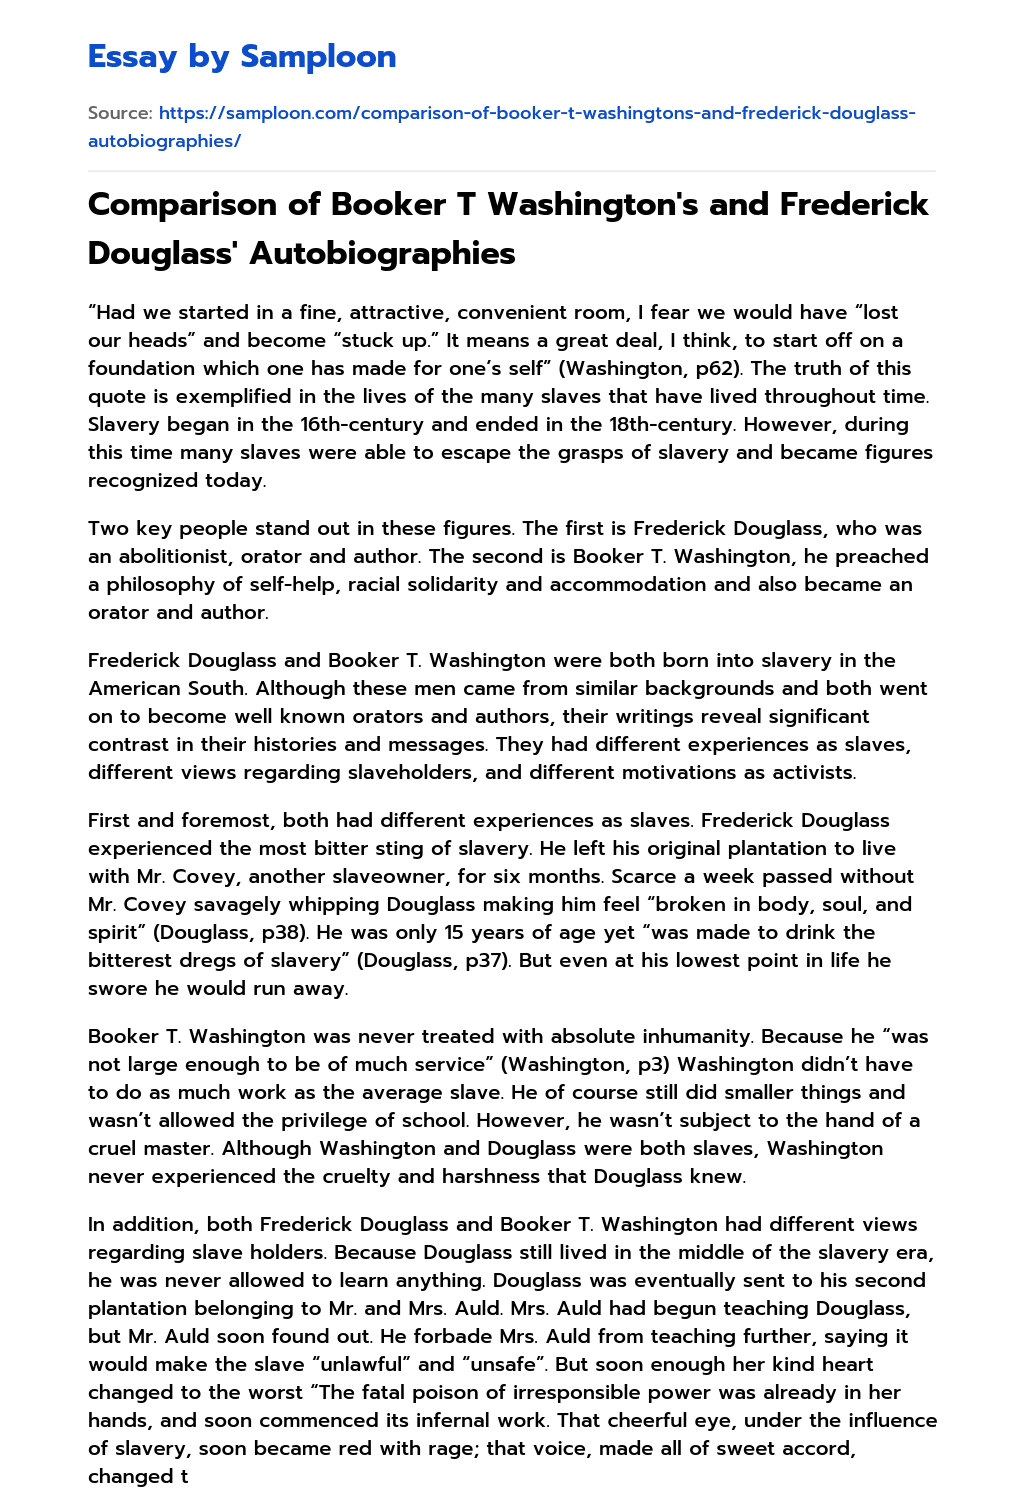 Comparison of Booker T Washington’s and Frederick Douglass’ Autobiographies essay